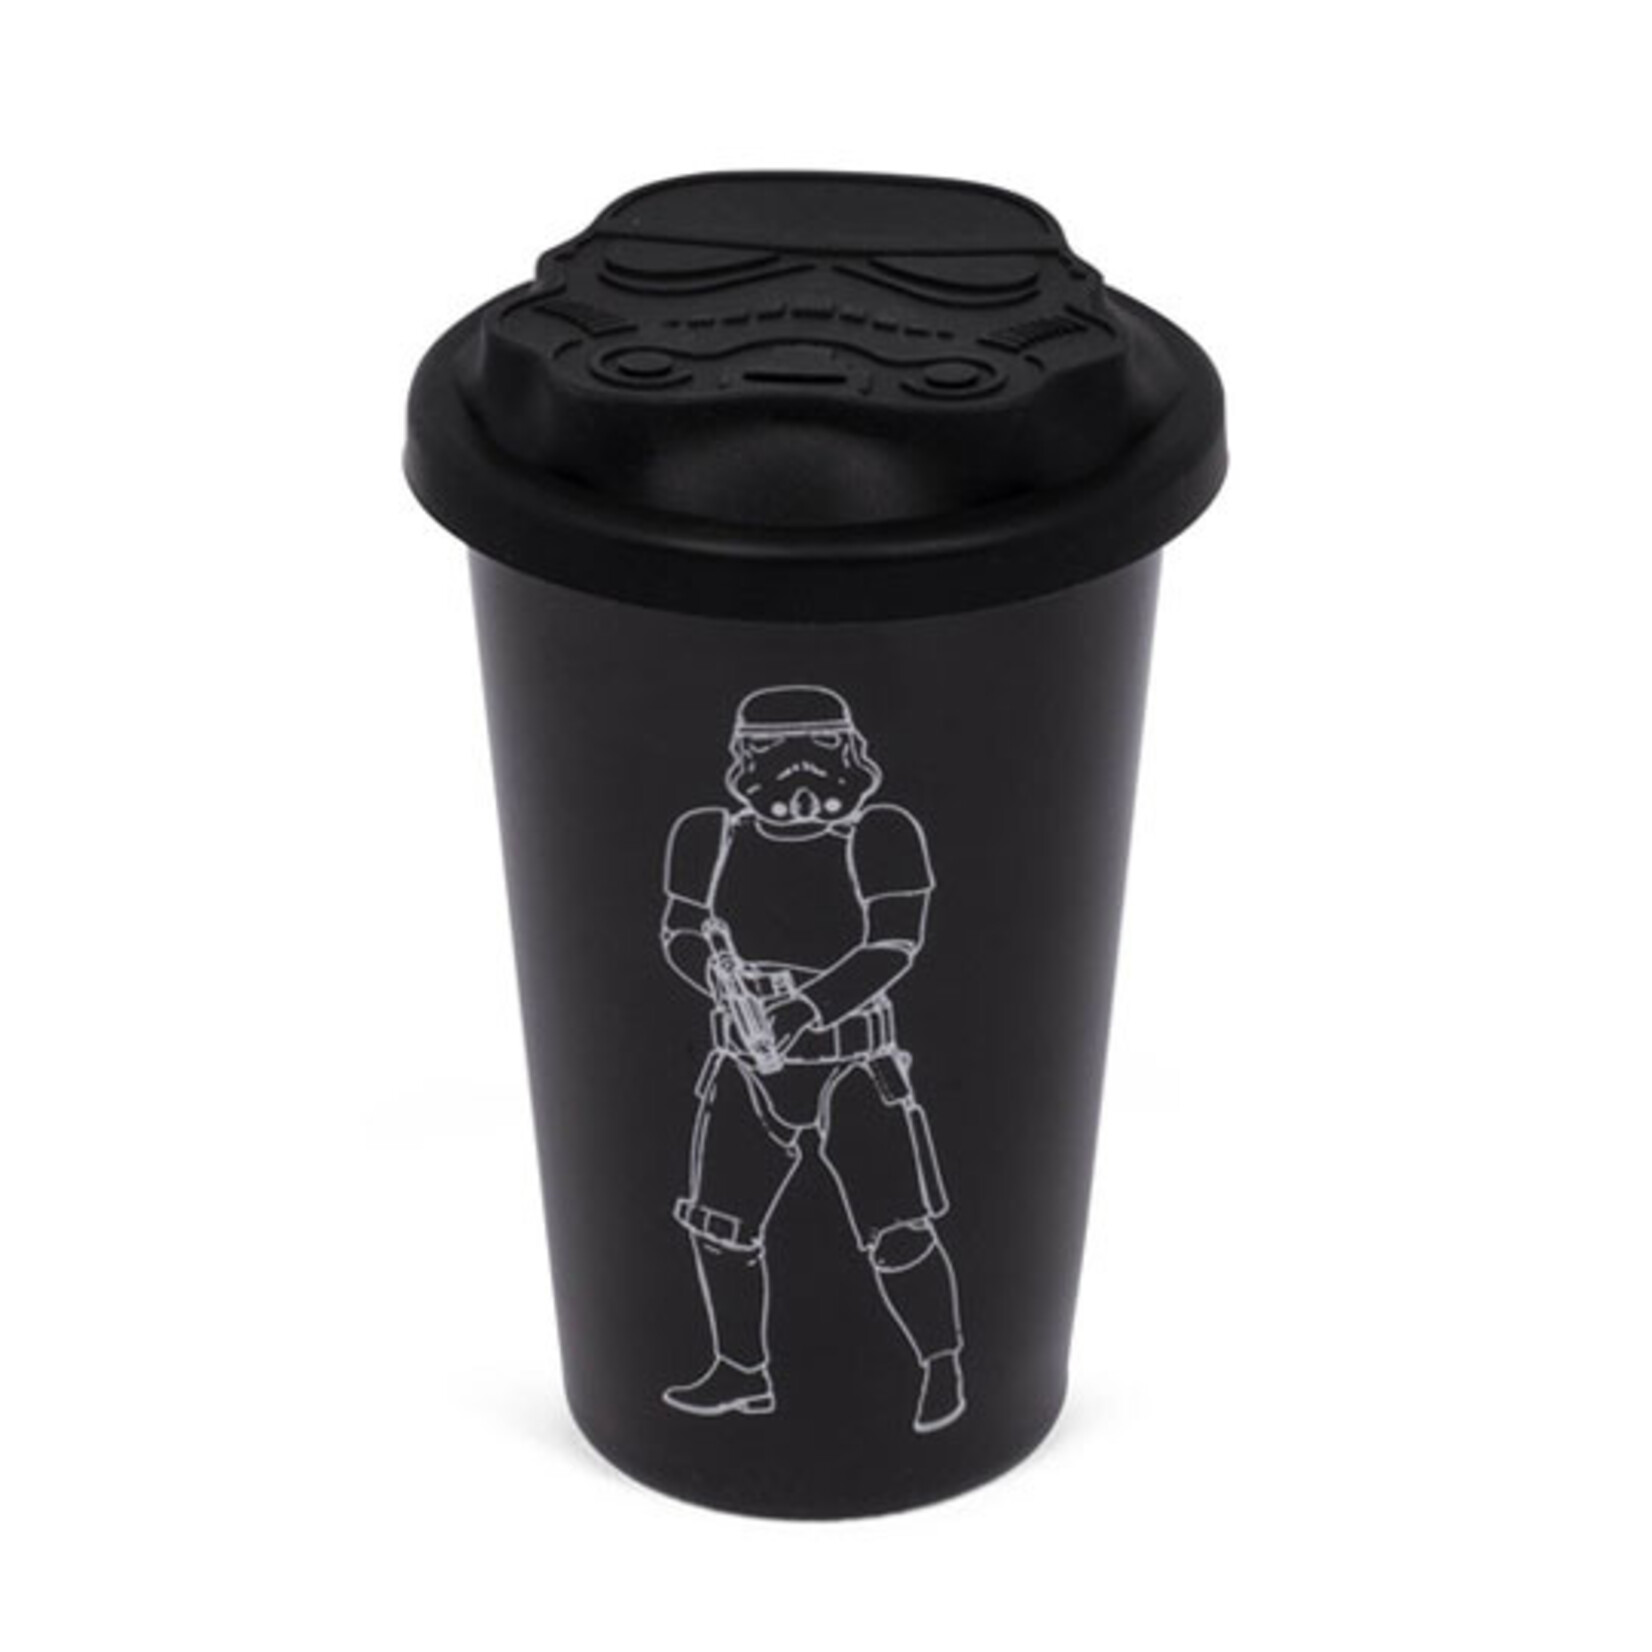 Thumbs Up! Thumbs Up! Star Wars Original Stormtrooper Travel Mug Black 275 ml